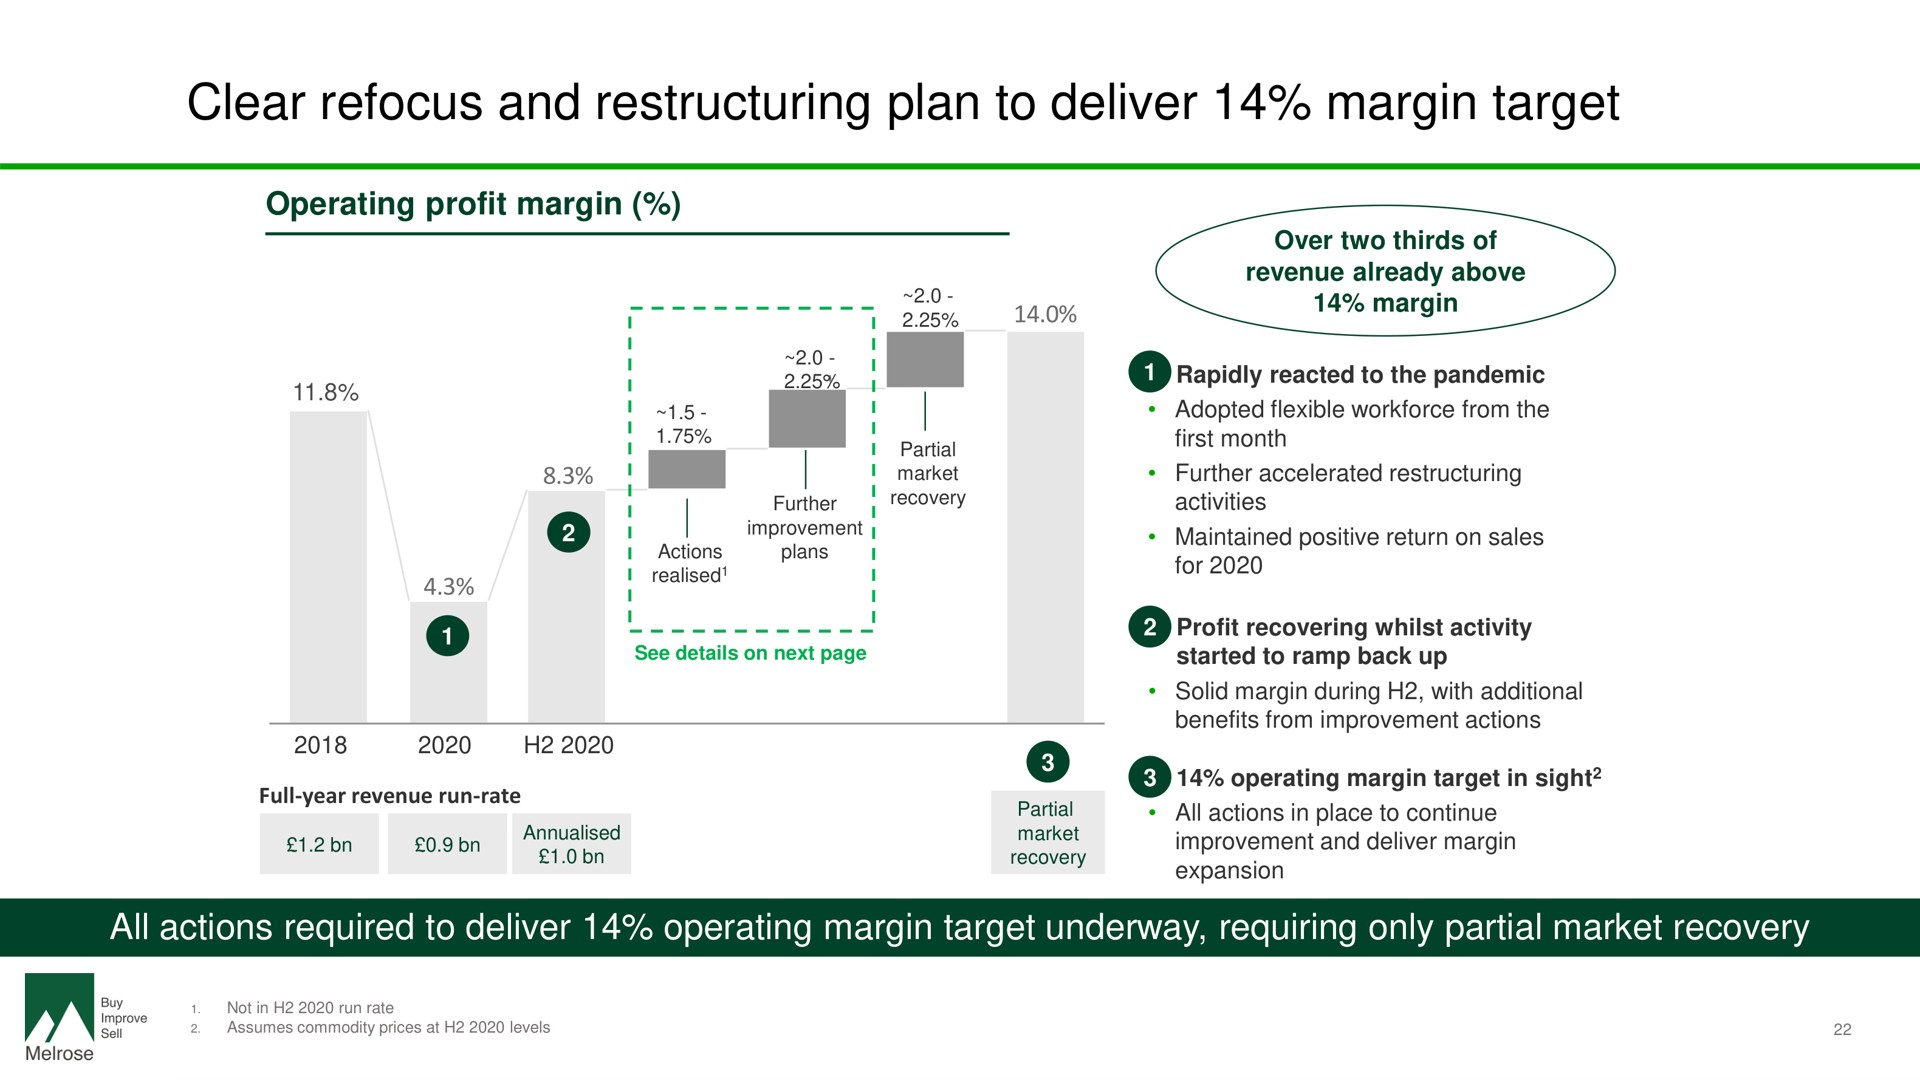 clear refocus and plan to deliver margin target | Melrose